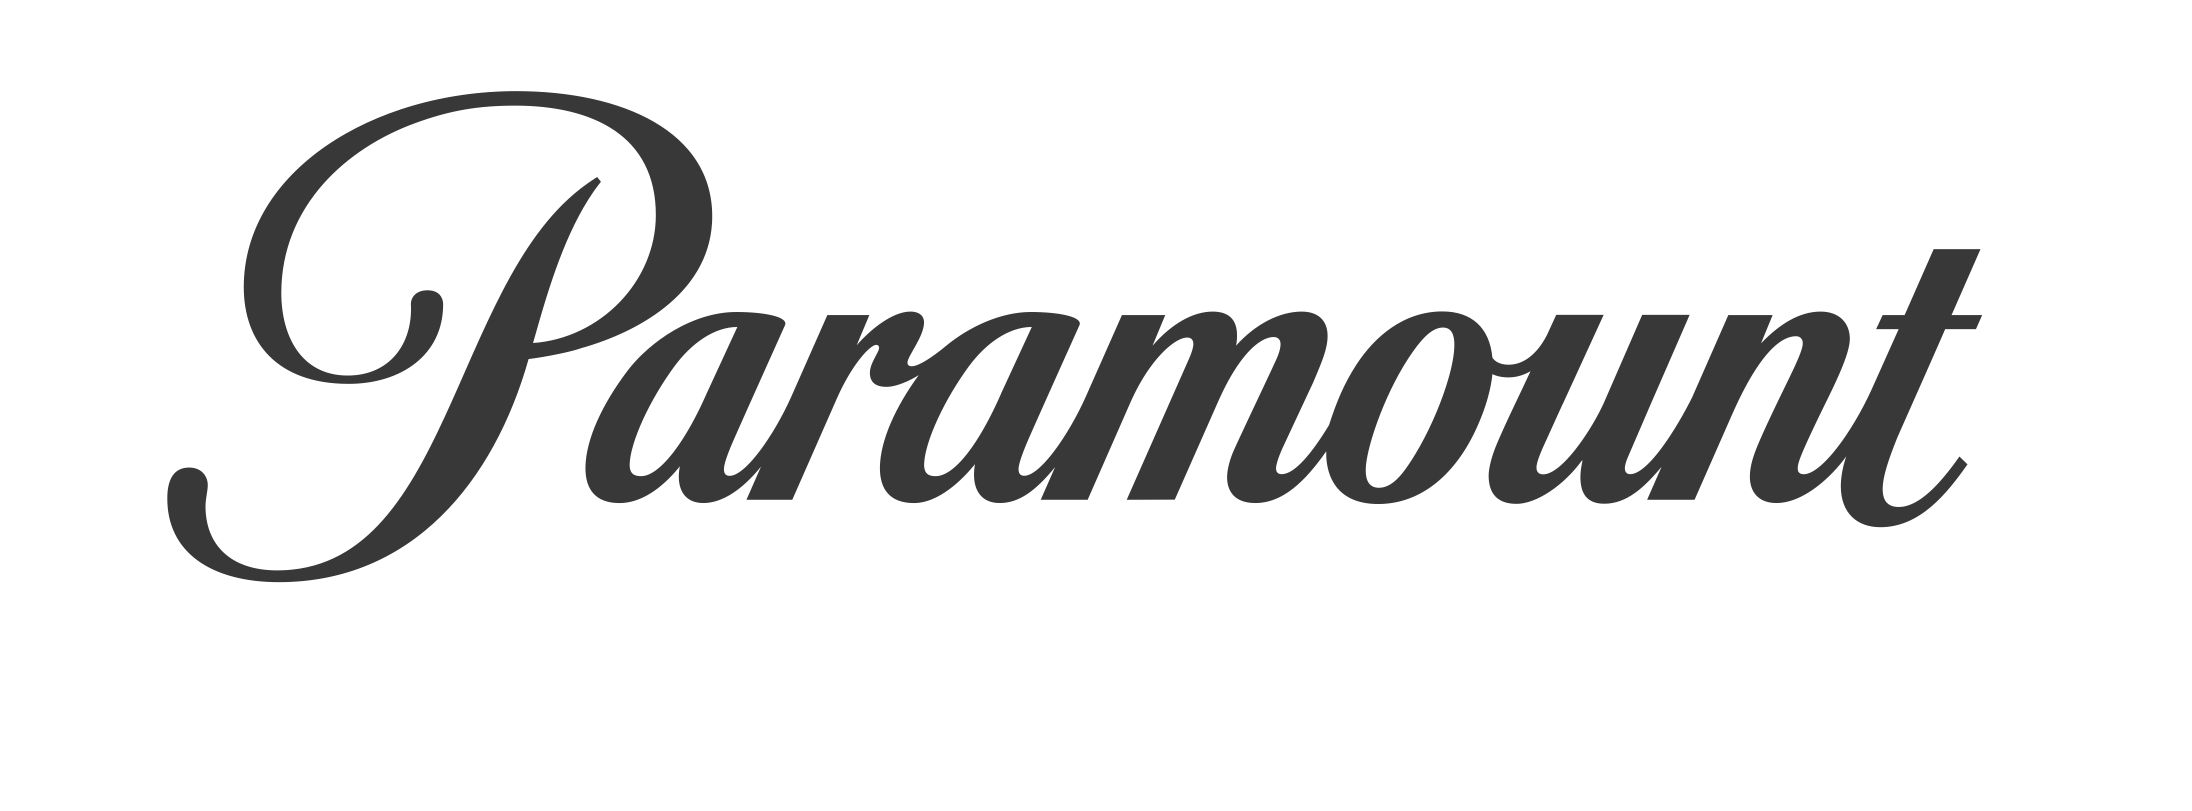 paramount-logo-png-5.png